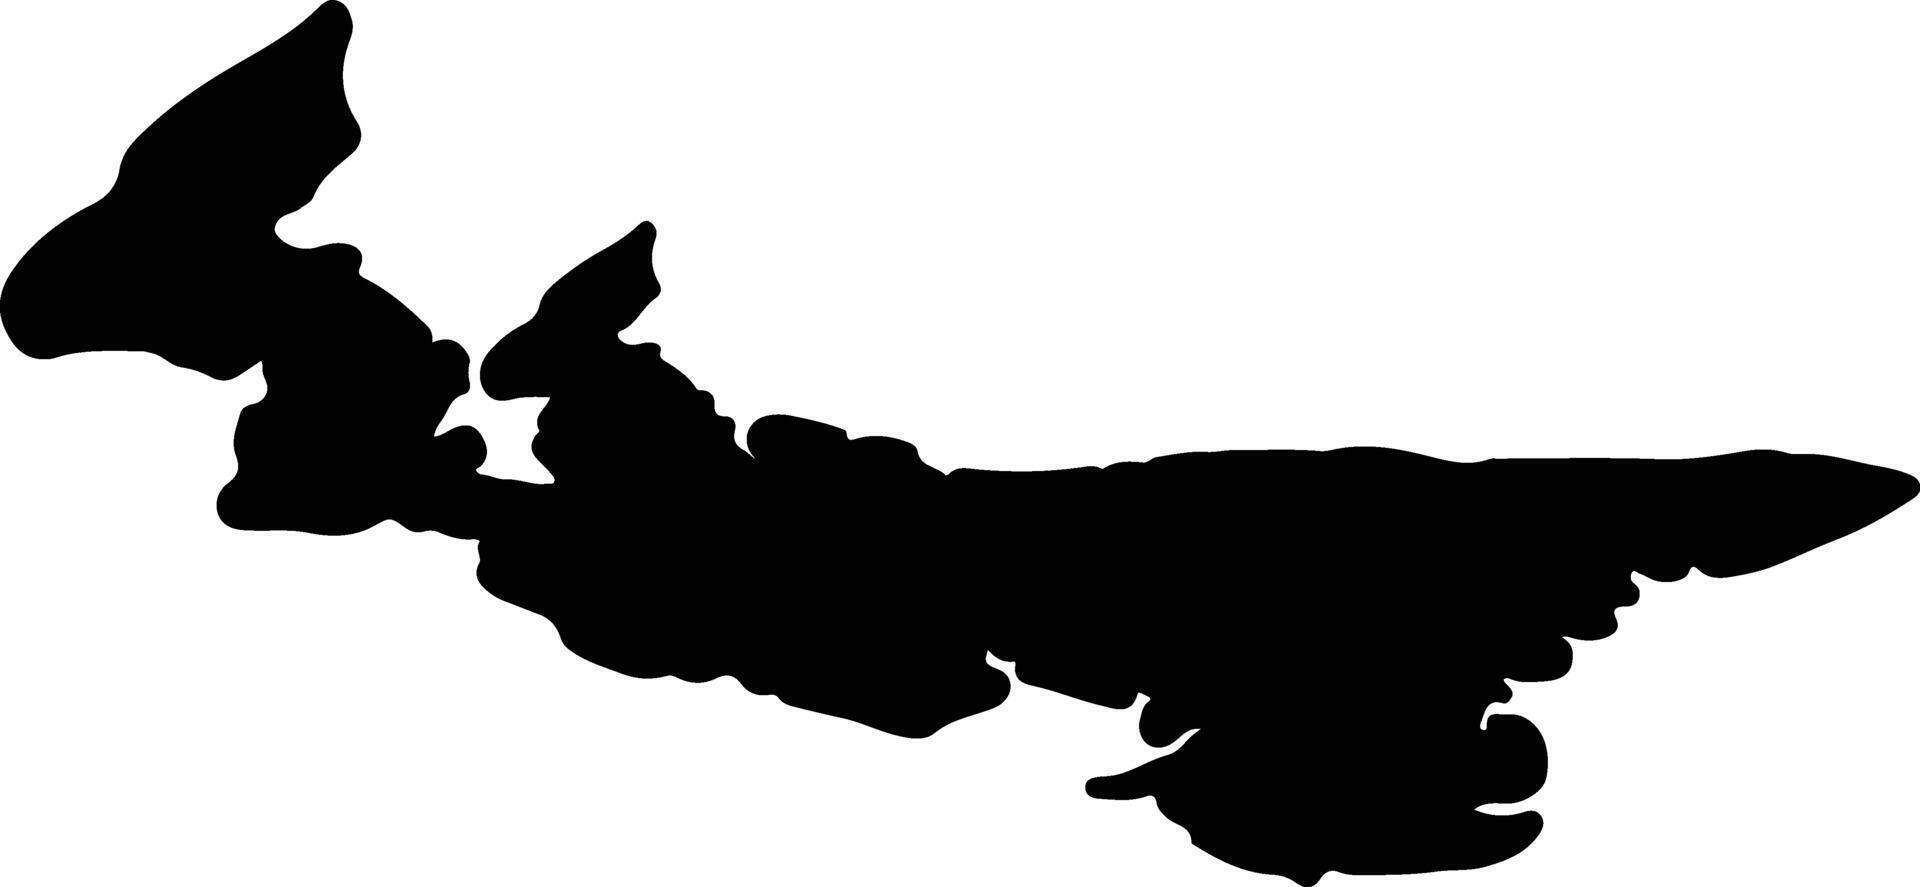 Prince Edward Island Canada silhouette map vector